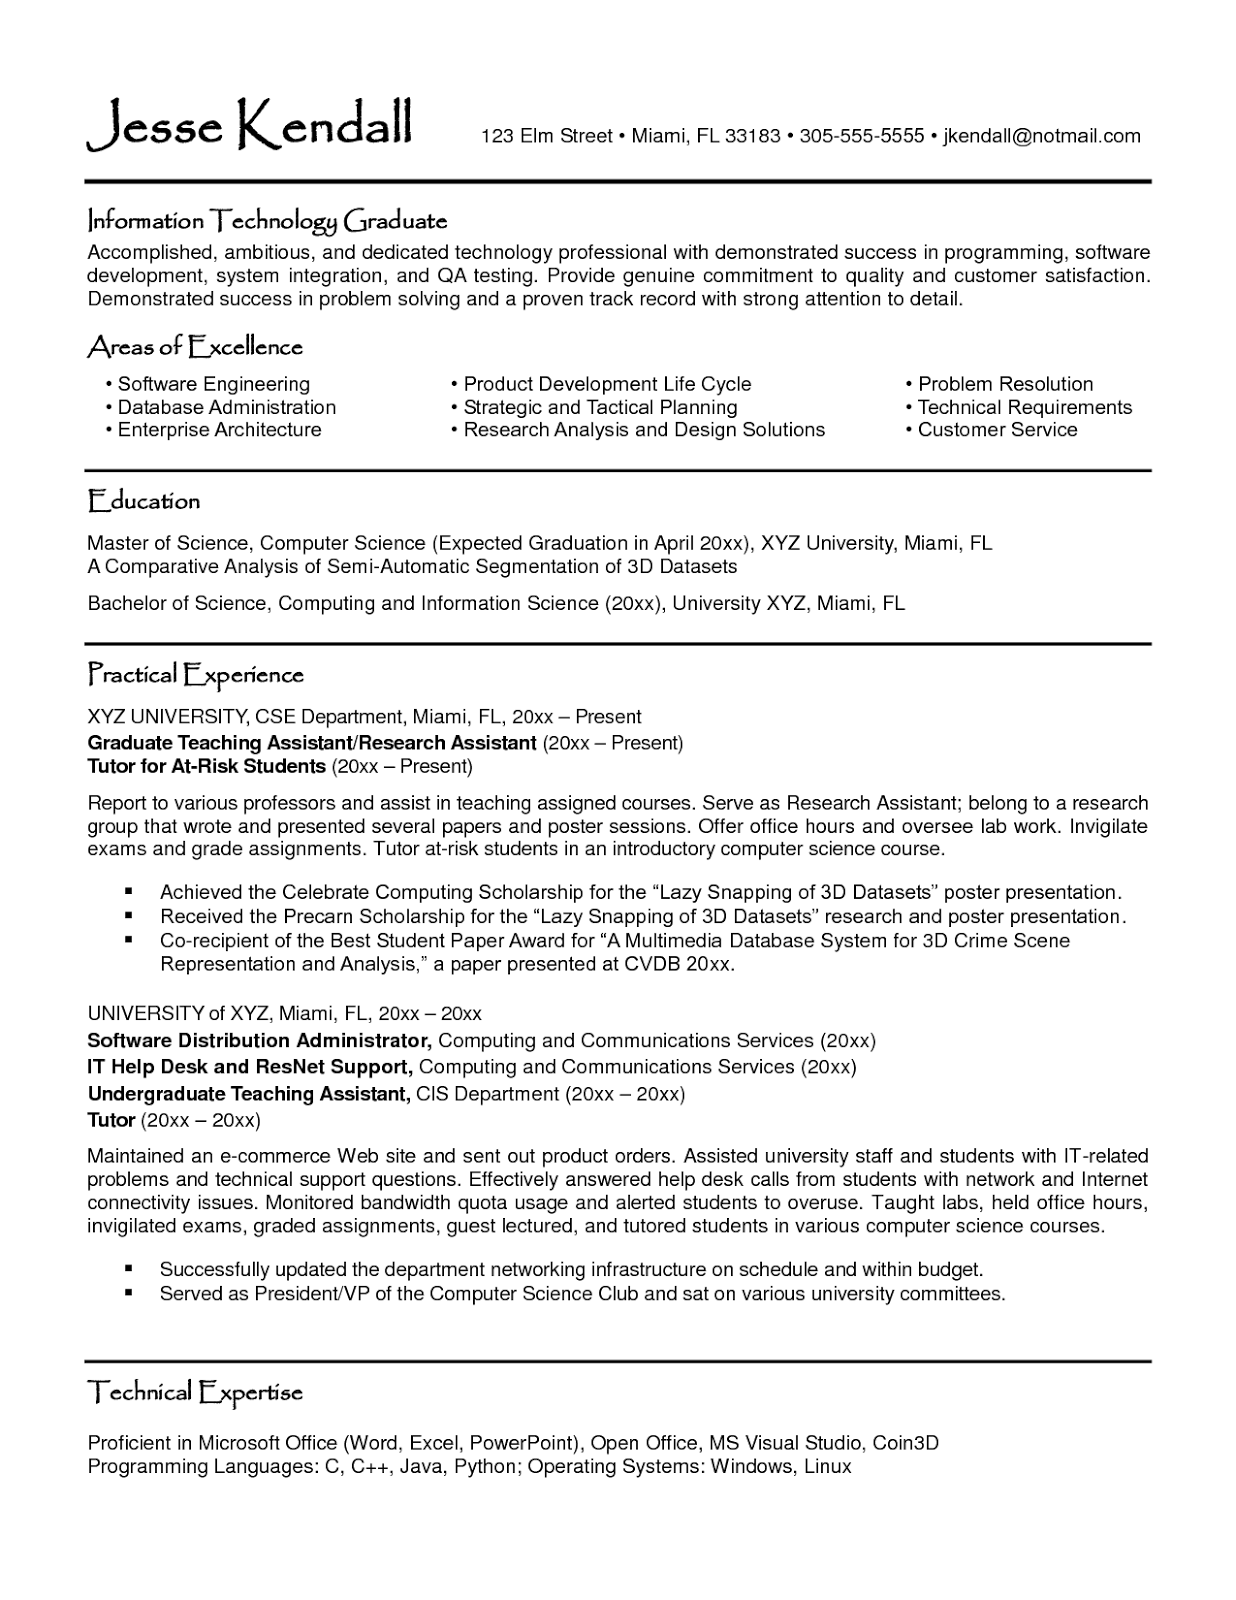 Internships for law school resume